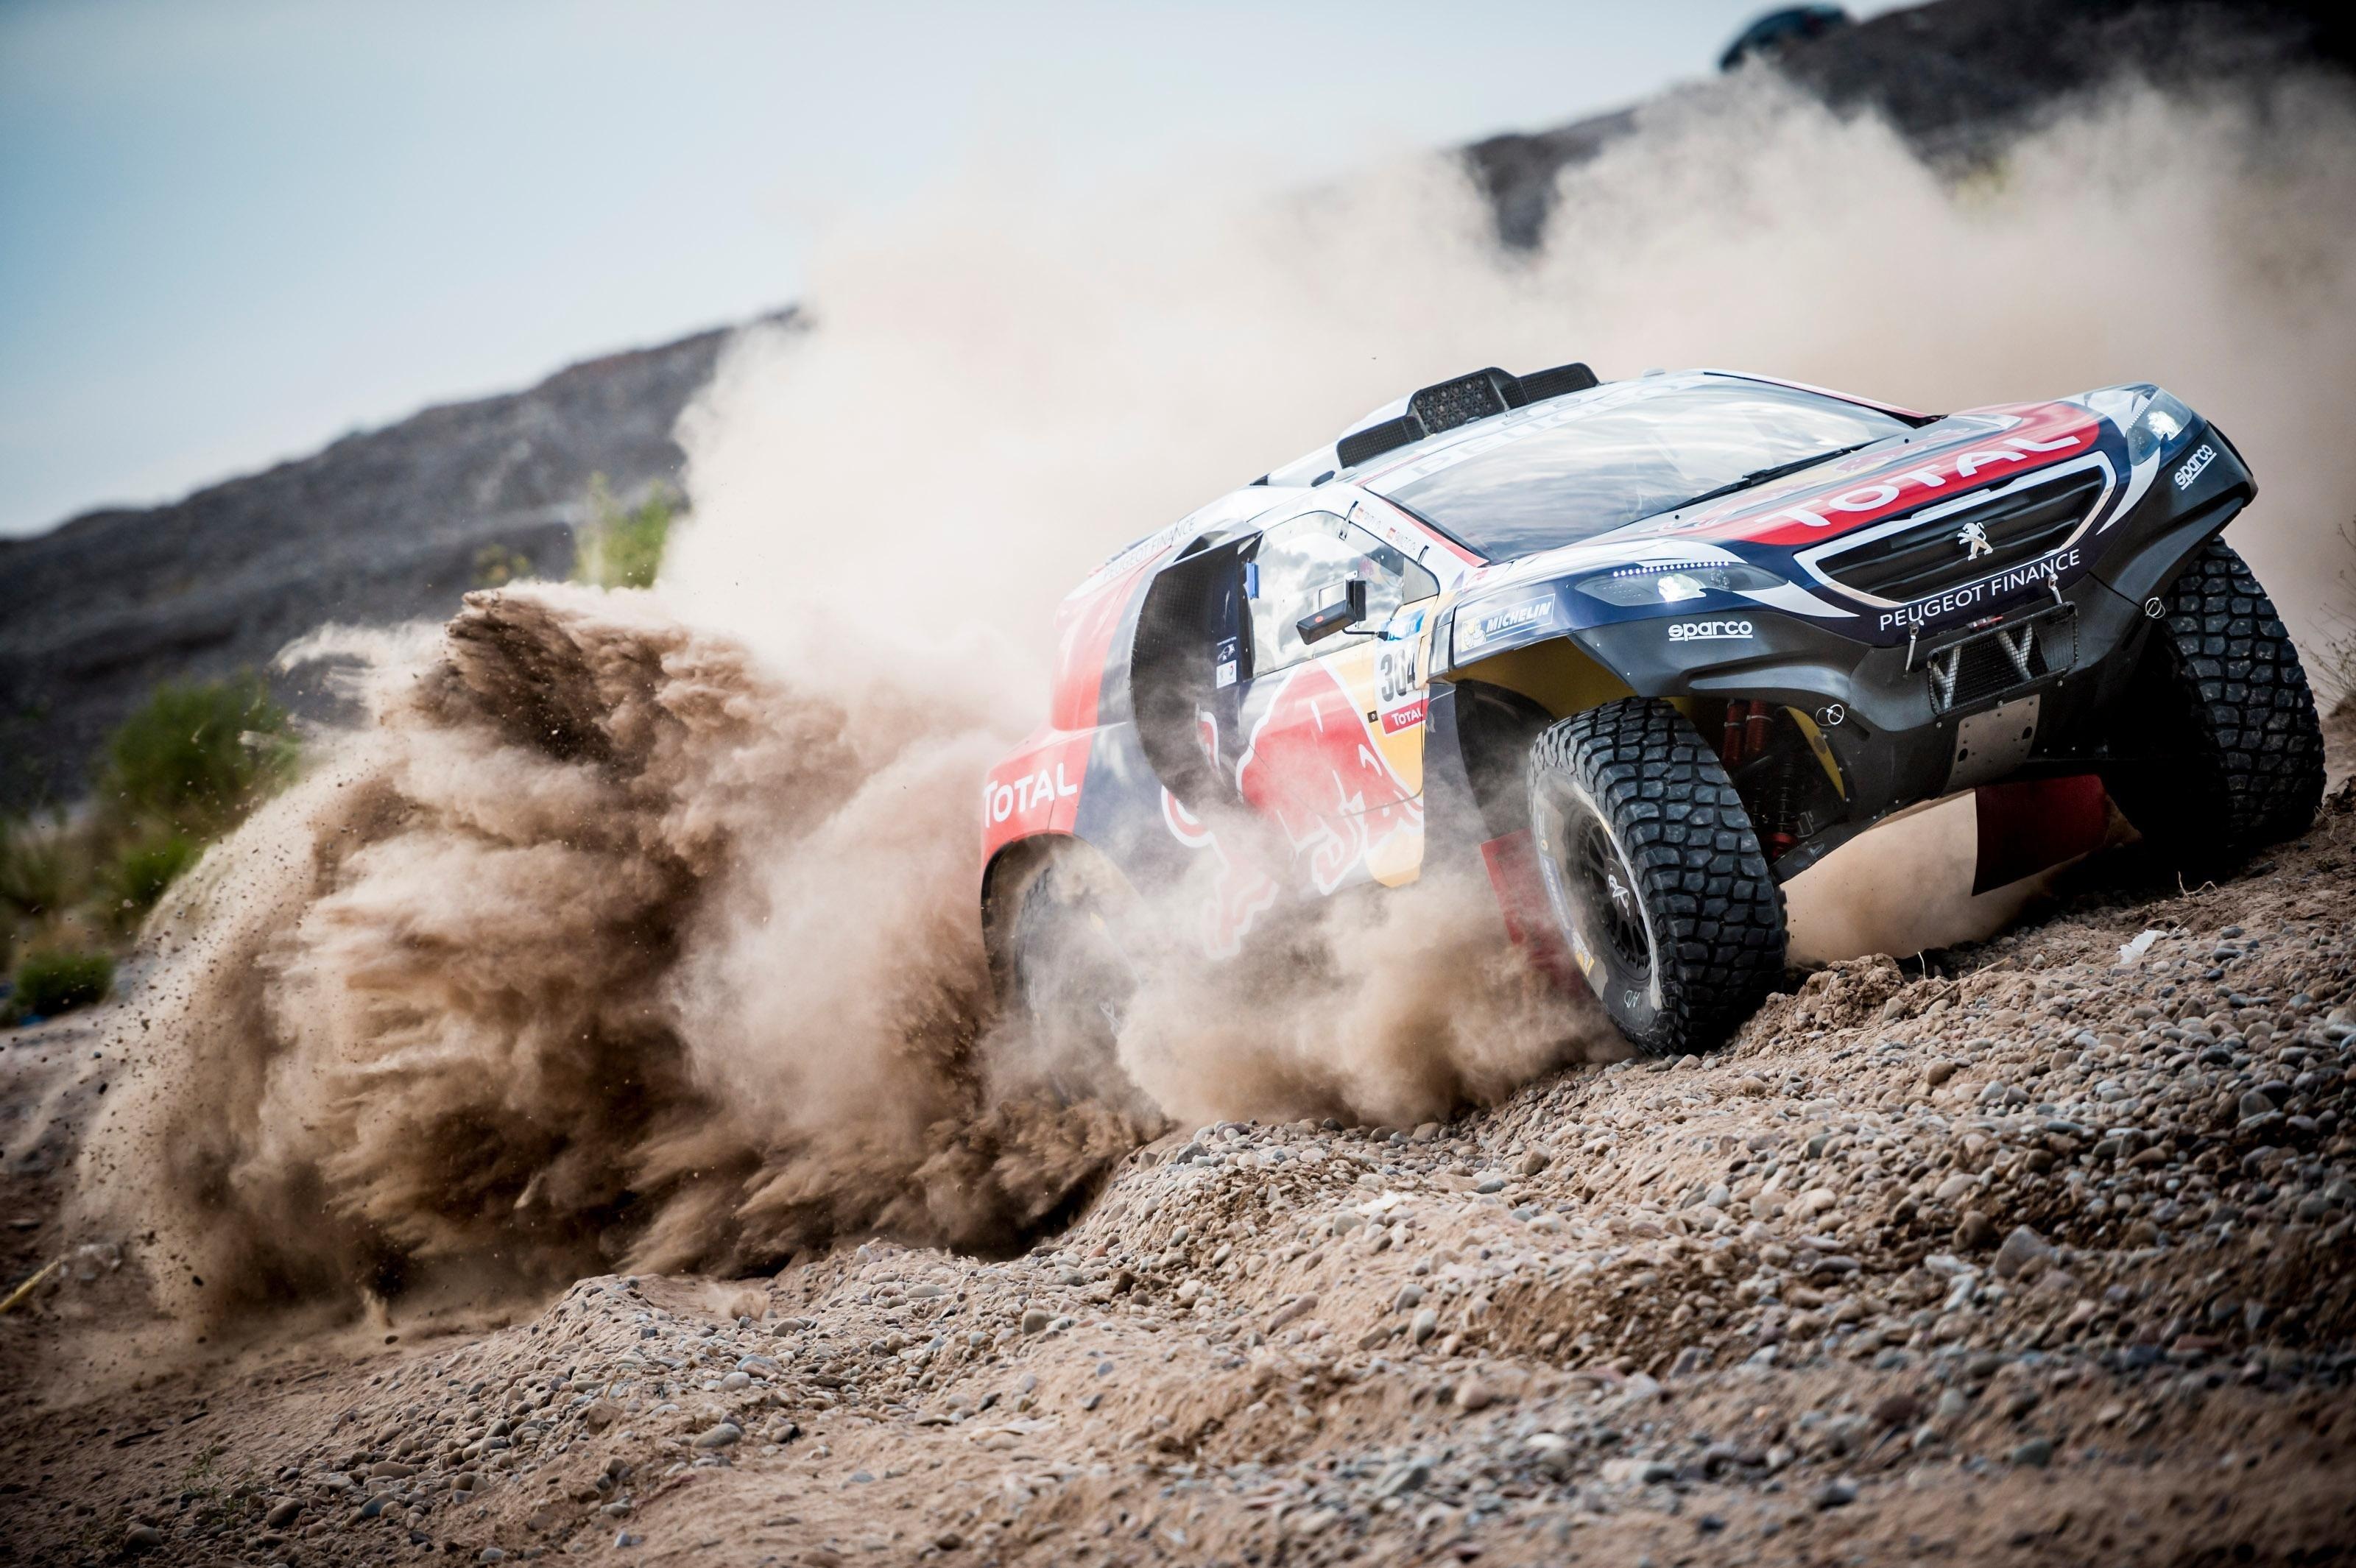 Rally Raid: Carlos Sainz Jr., Spanish Racing Driver, Red Bull, Peugeot Dakar Rally Team, 2015. 3200x2130 HD Wallpaper.